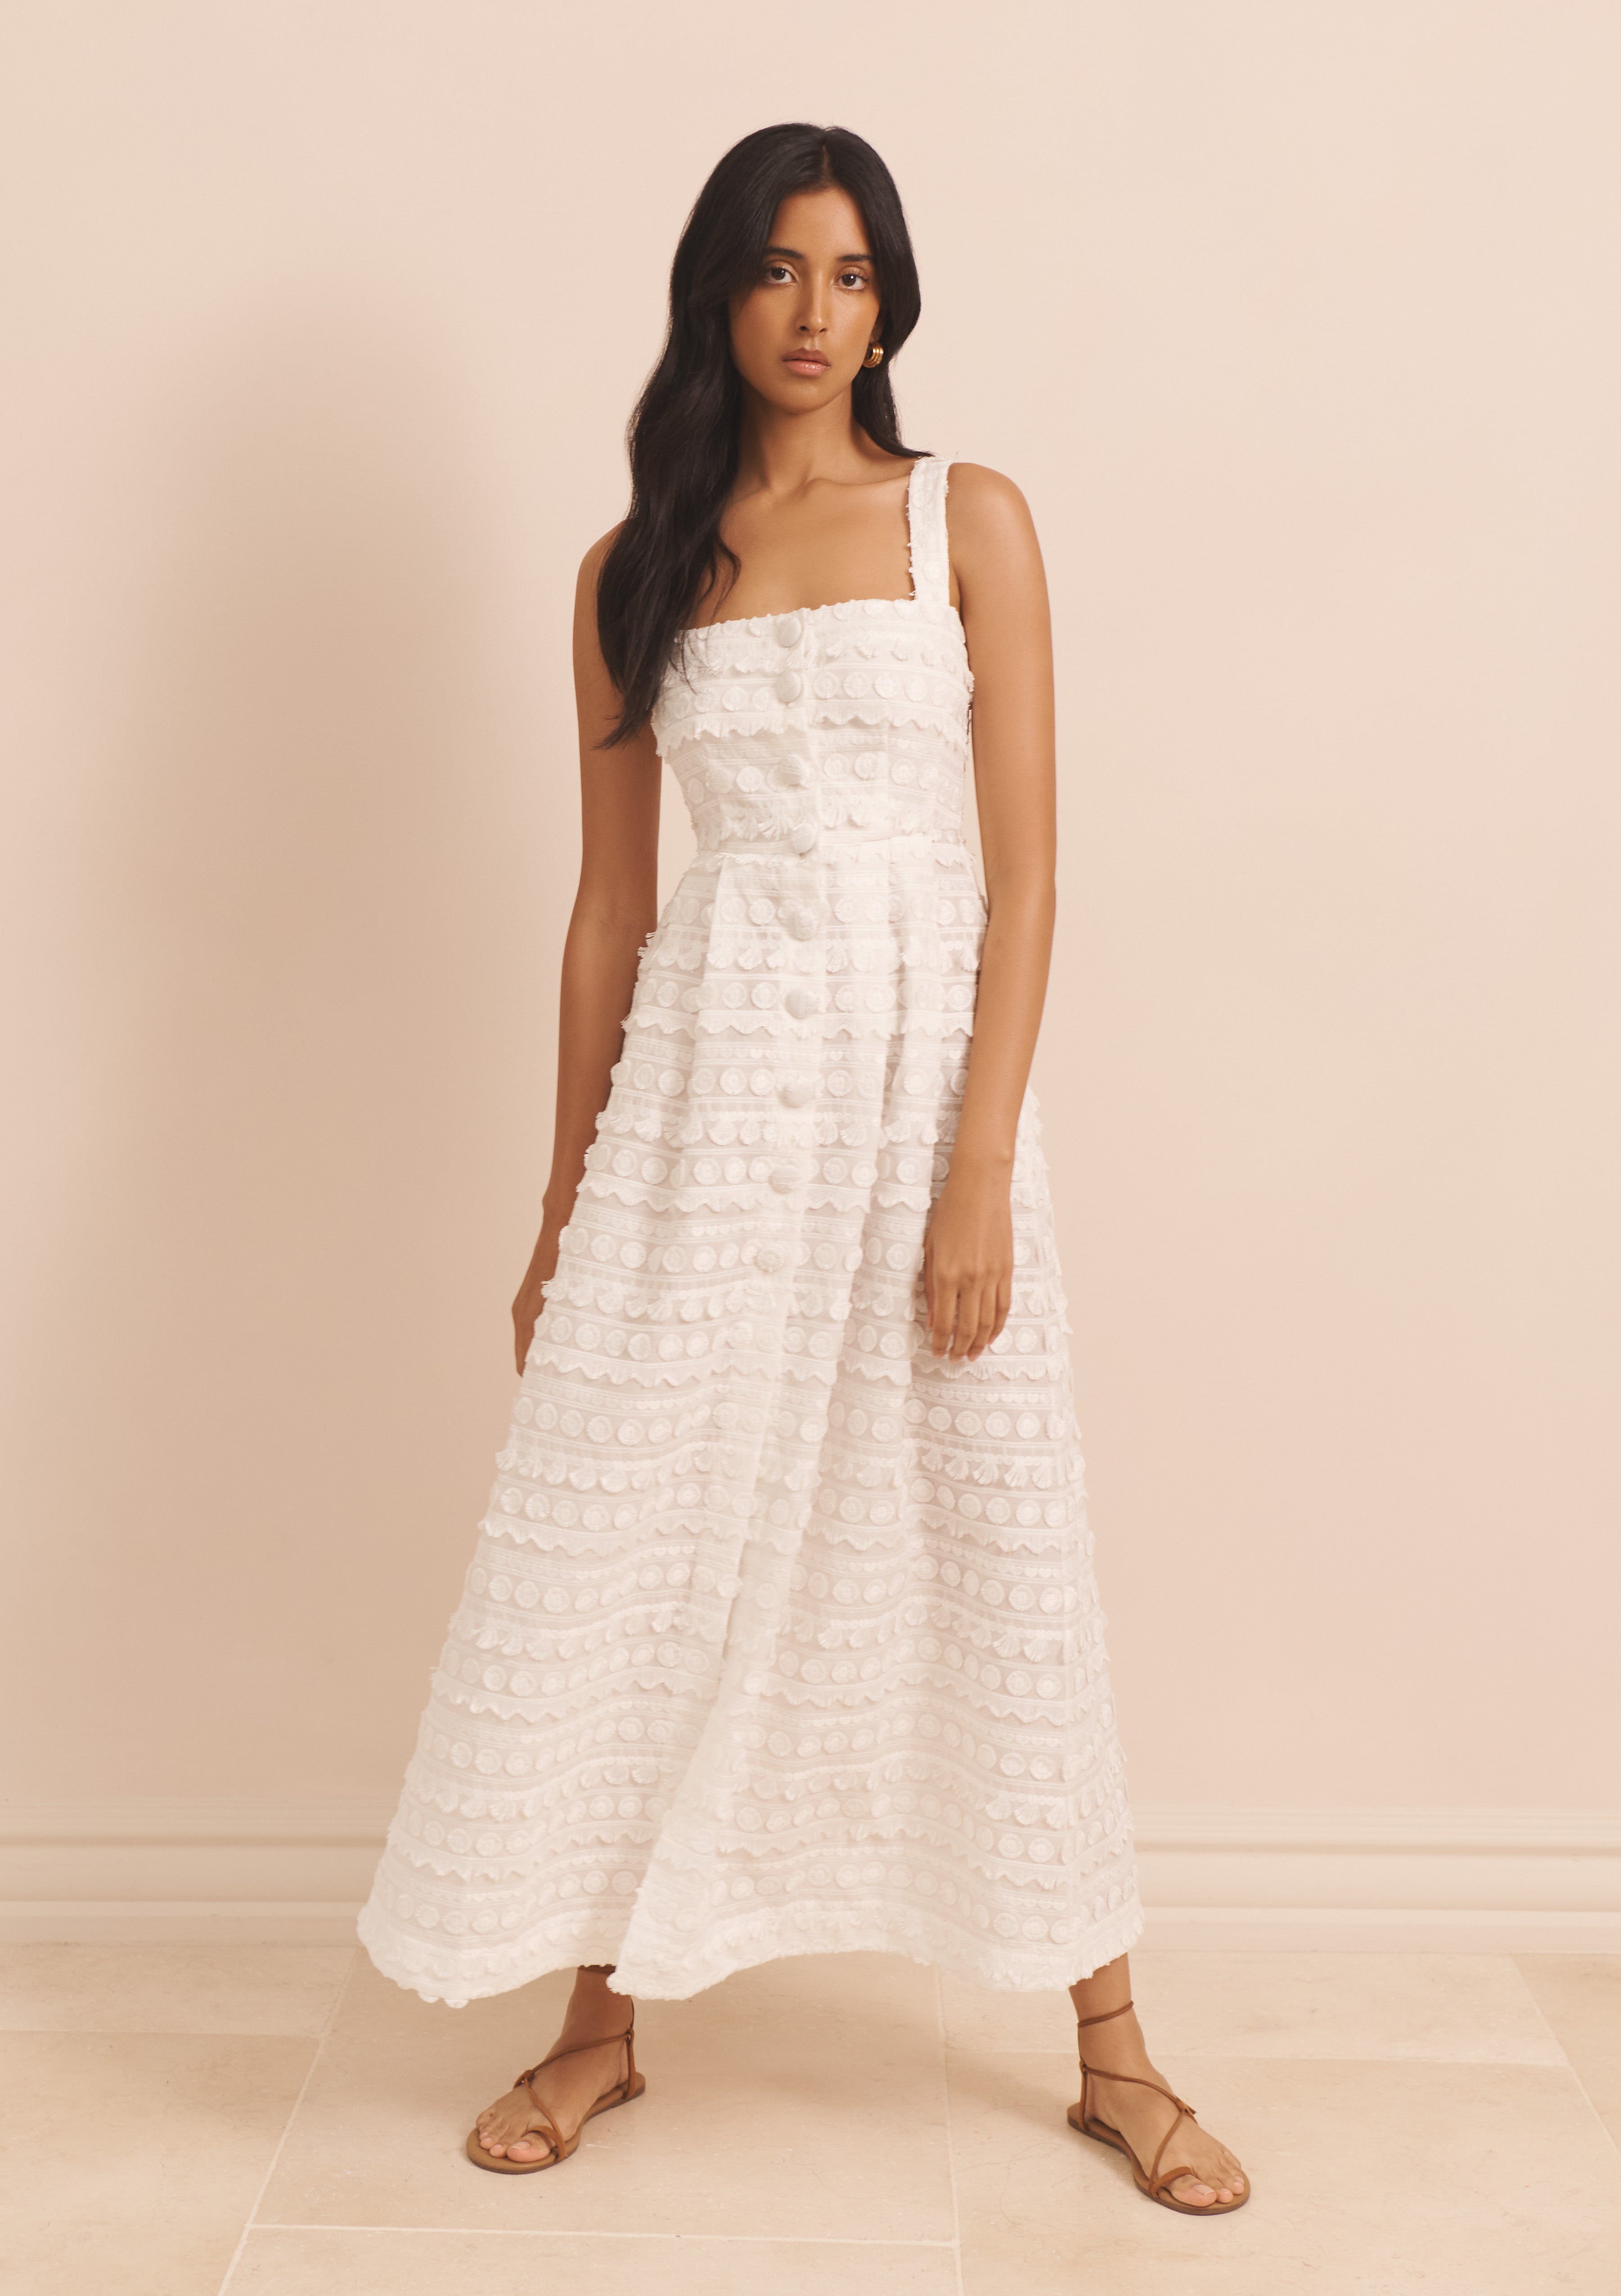 ARLA DRESS IN SOFT WHITE FRINGE TEXTILE - LIMITED PRE-ORDER